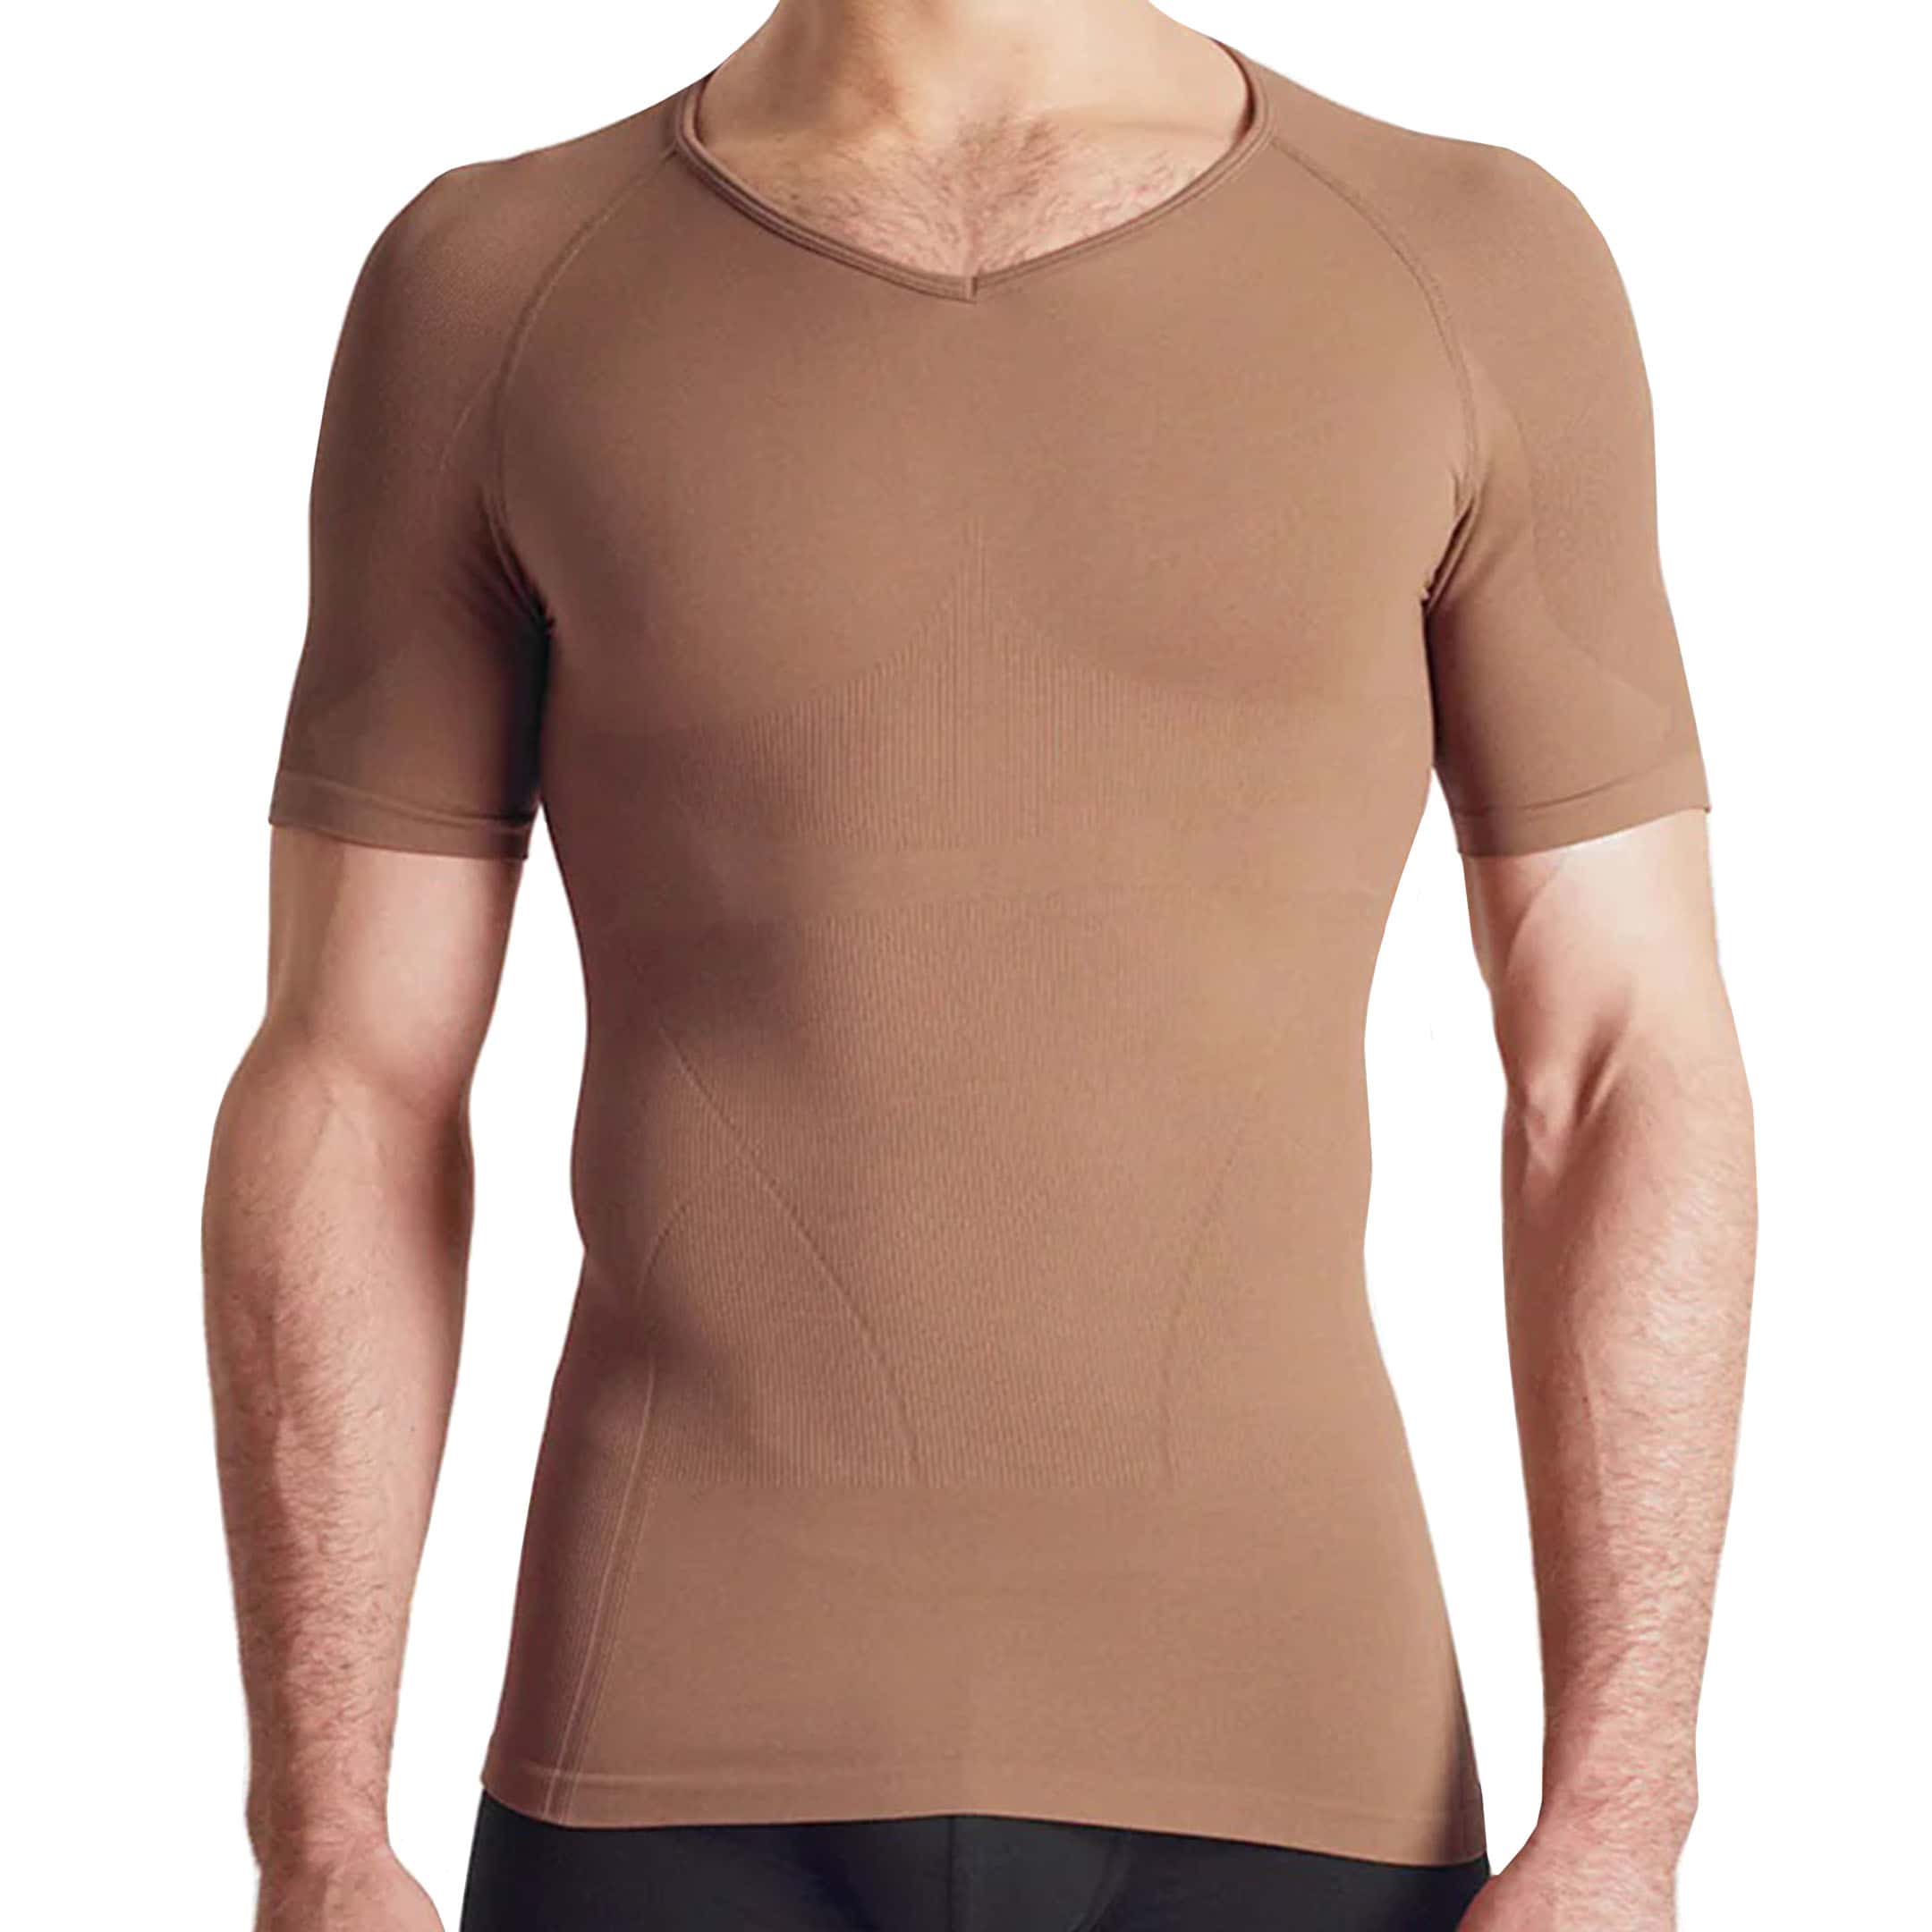 https://www.inderwear.com/163311/seamless-compression-t-shirt-cacoa-rounderbum.jpg